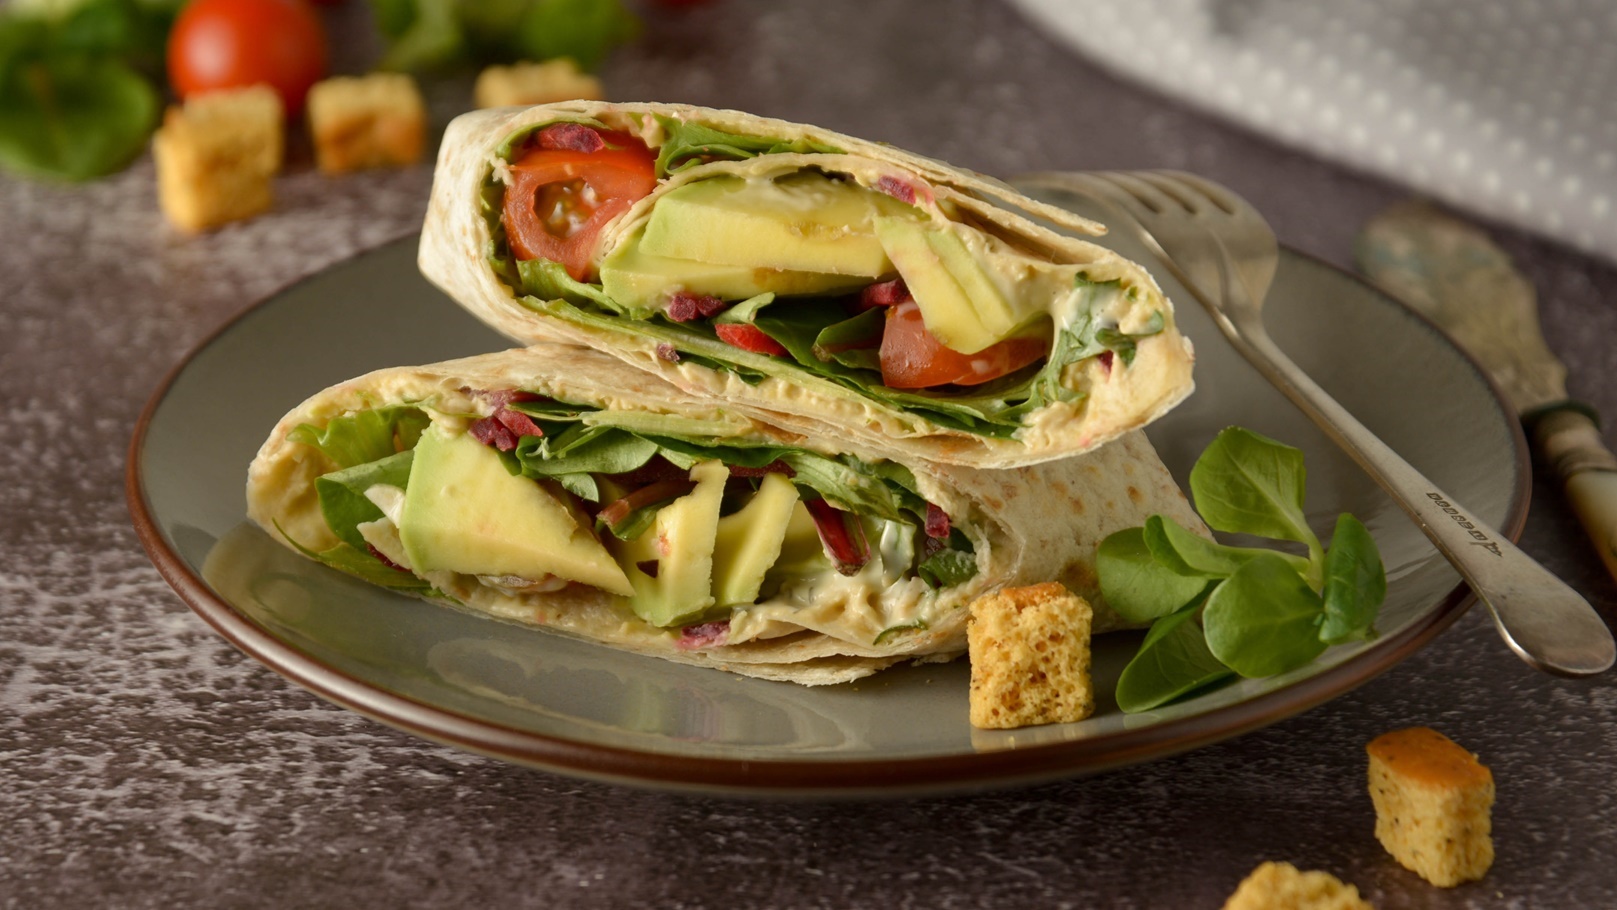 tortilla-wraps-sandwich-with-avocado-and-vegetab-2021-09-01-16-30-15-utc